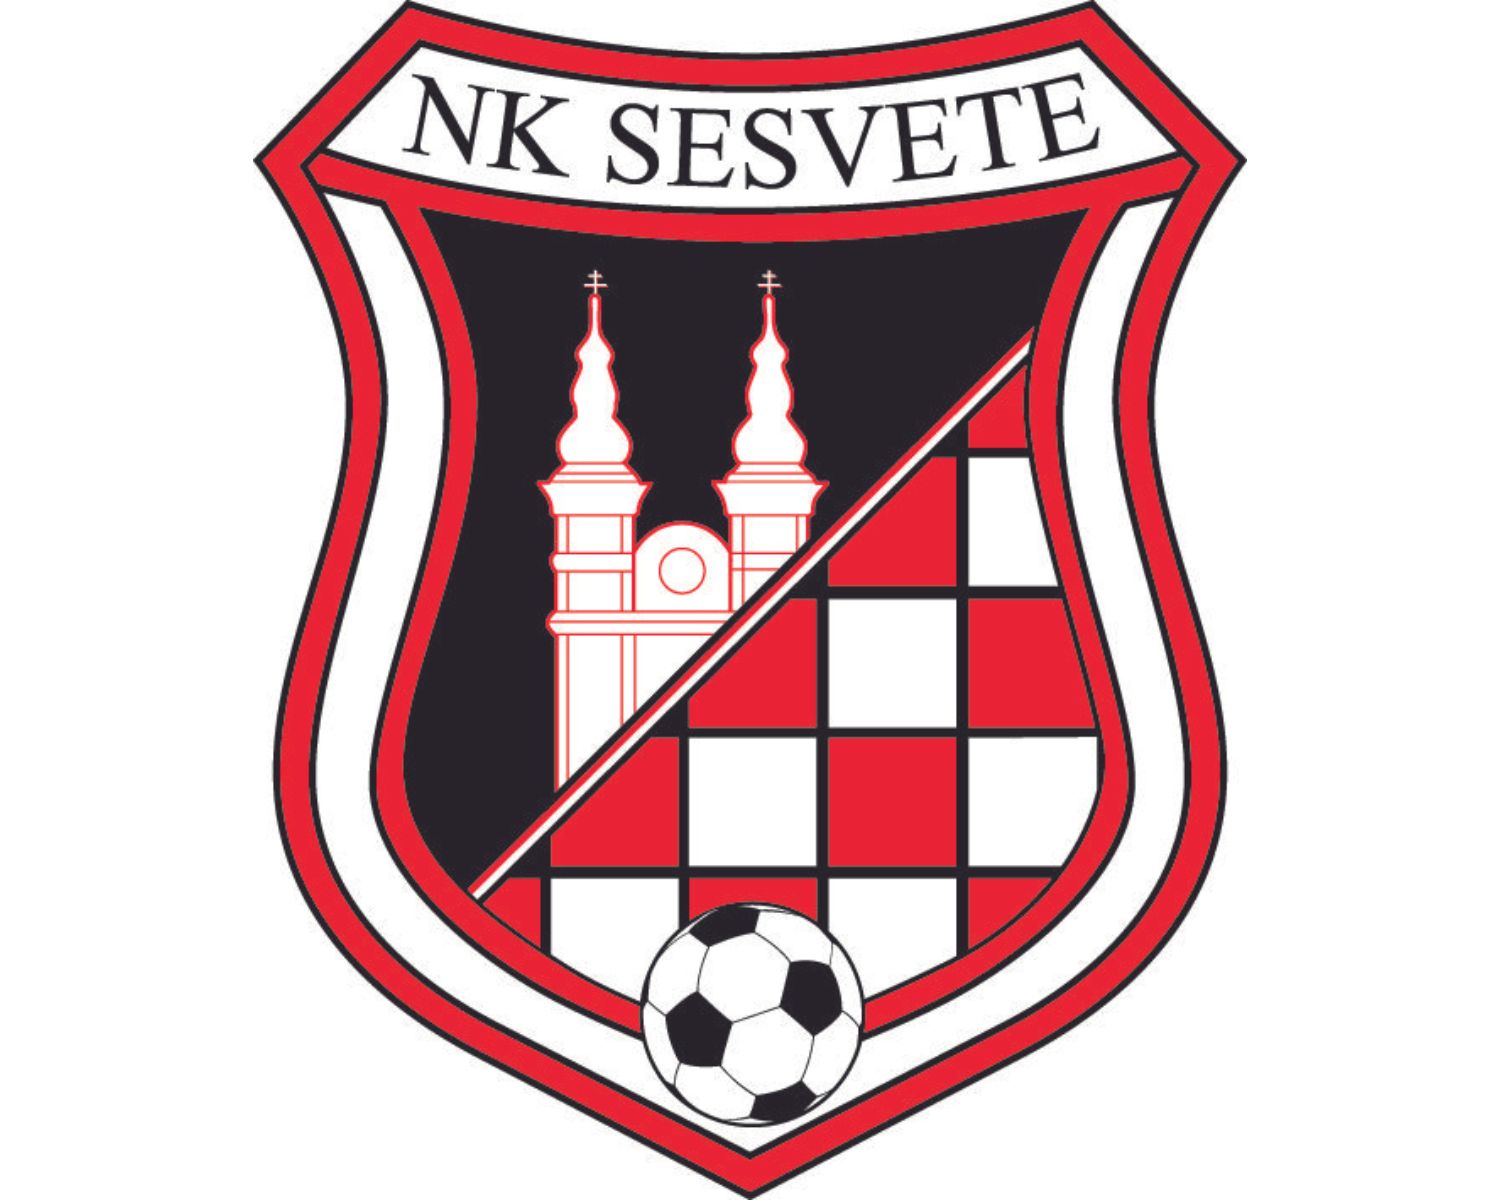 Nk Croatia Sesvete: 14 Football Club Facts - Facts.net